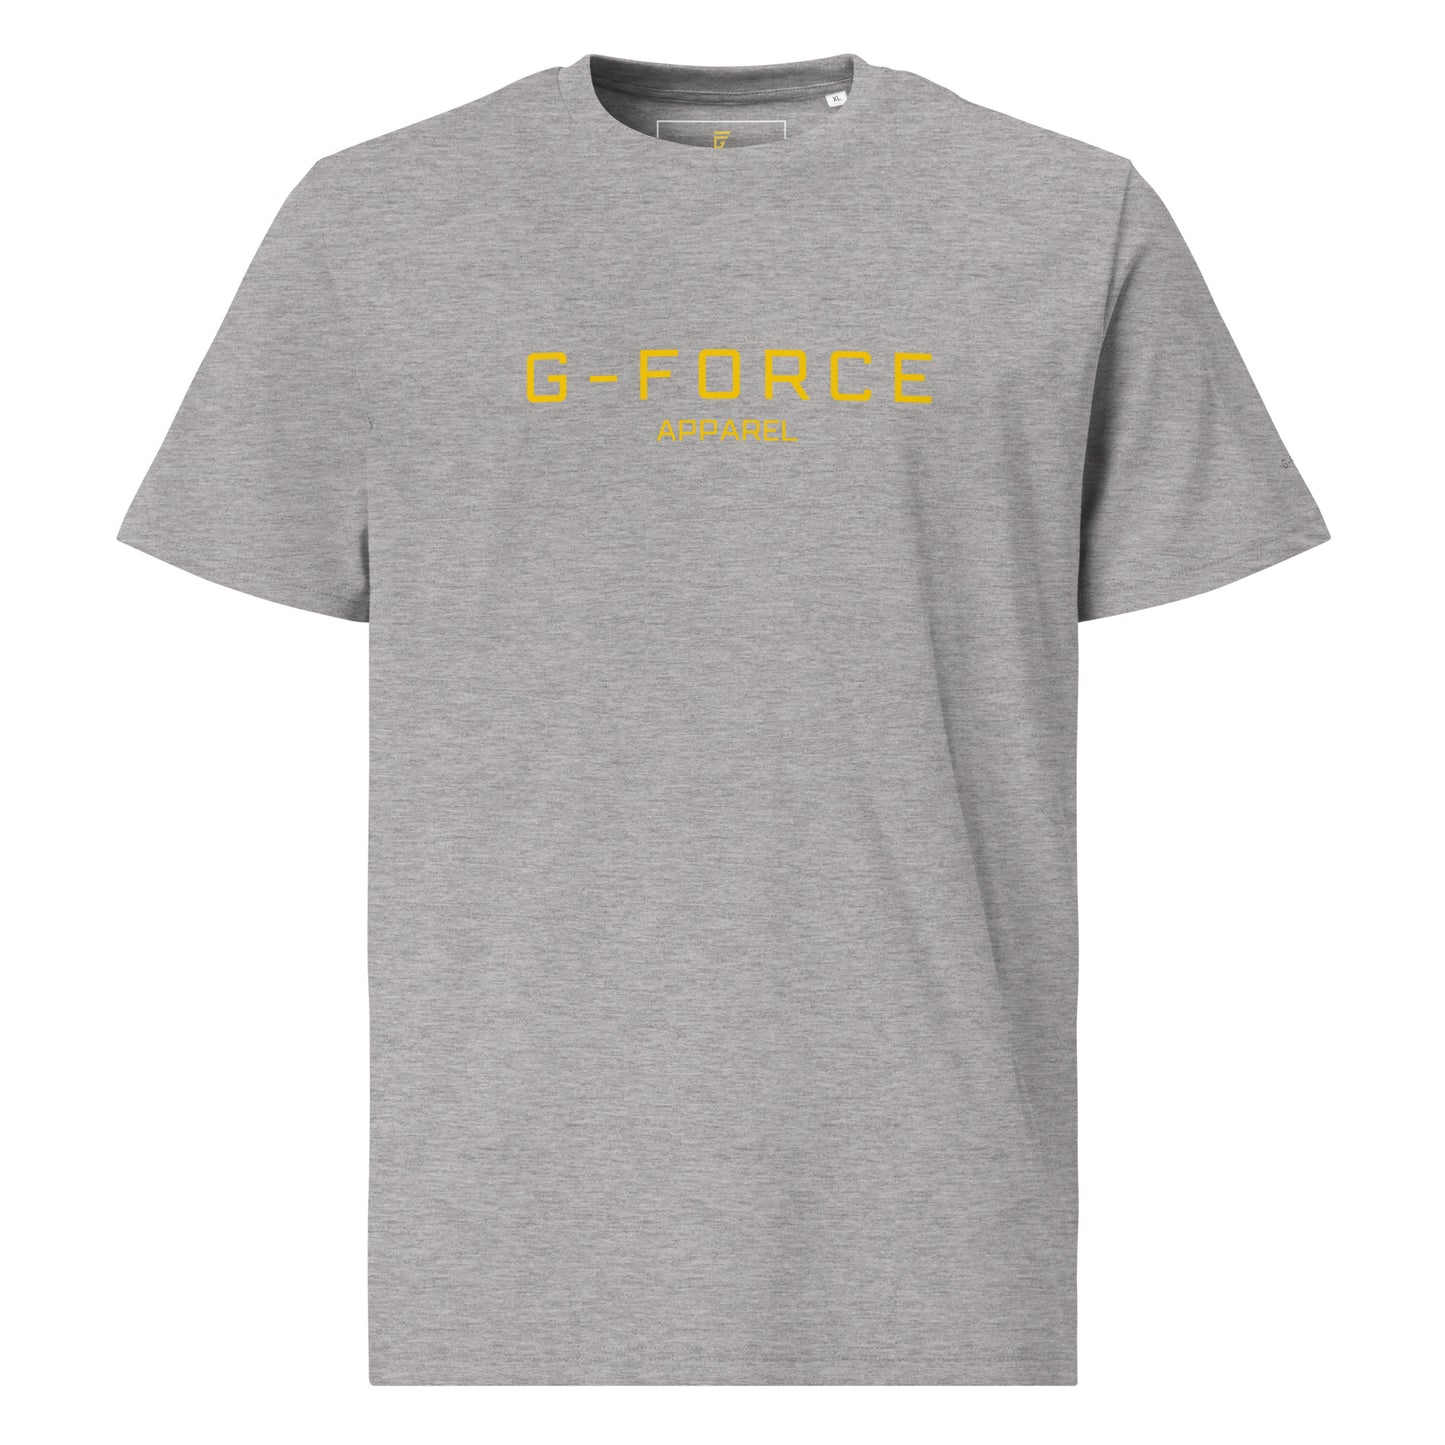 G-FORCE APPAREL SL T-shirt